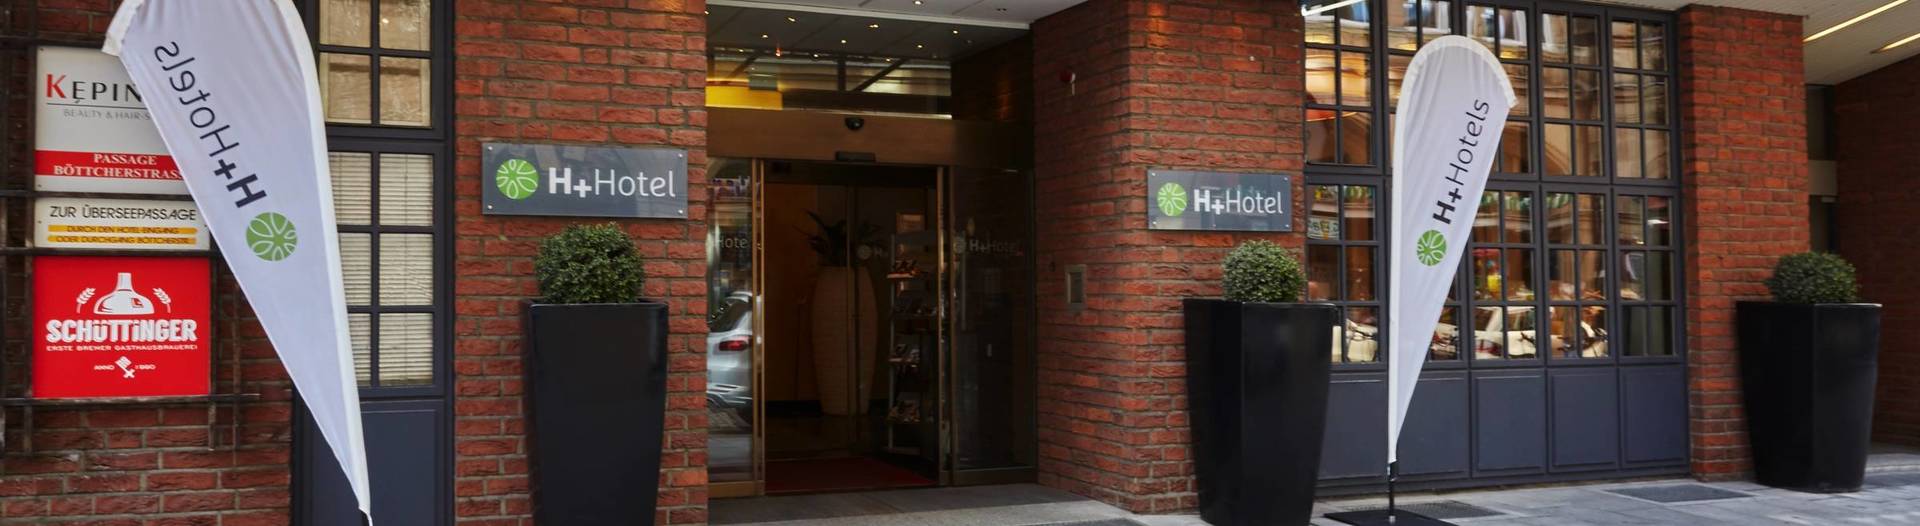 Reviews: H+ Hotel Bremen - Official website